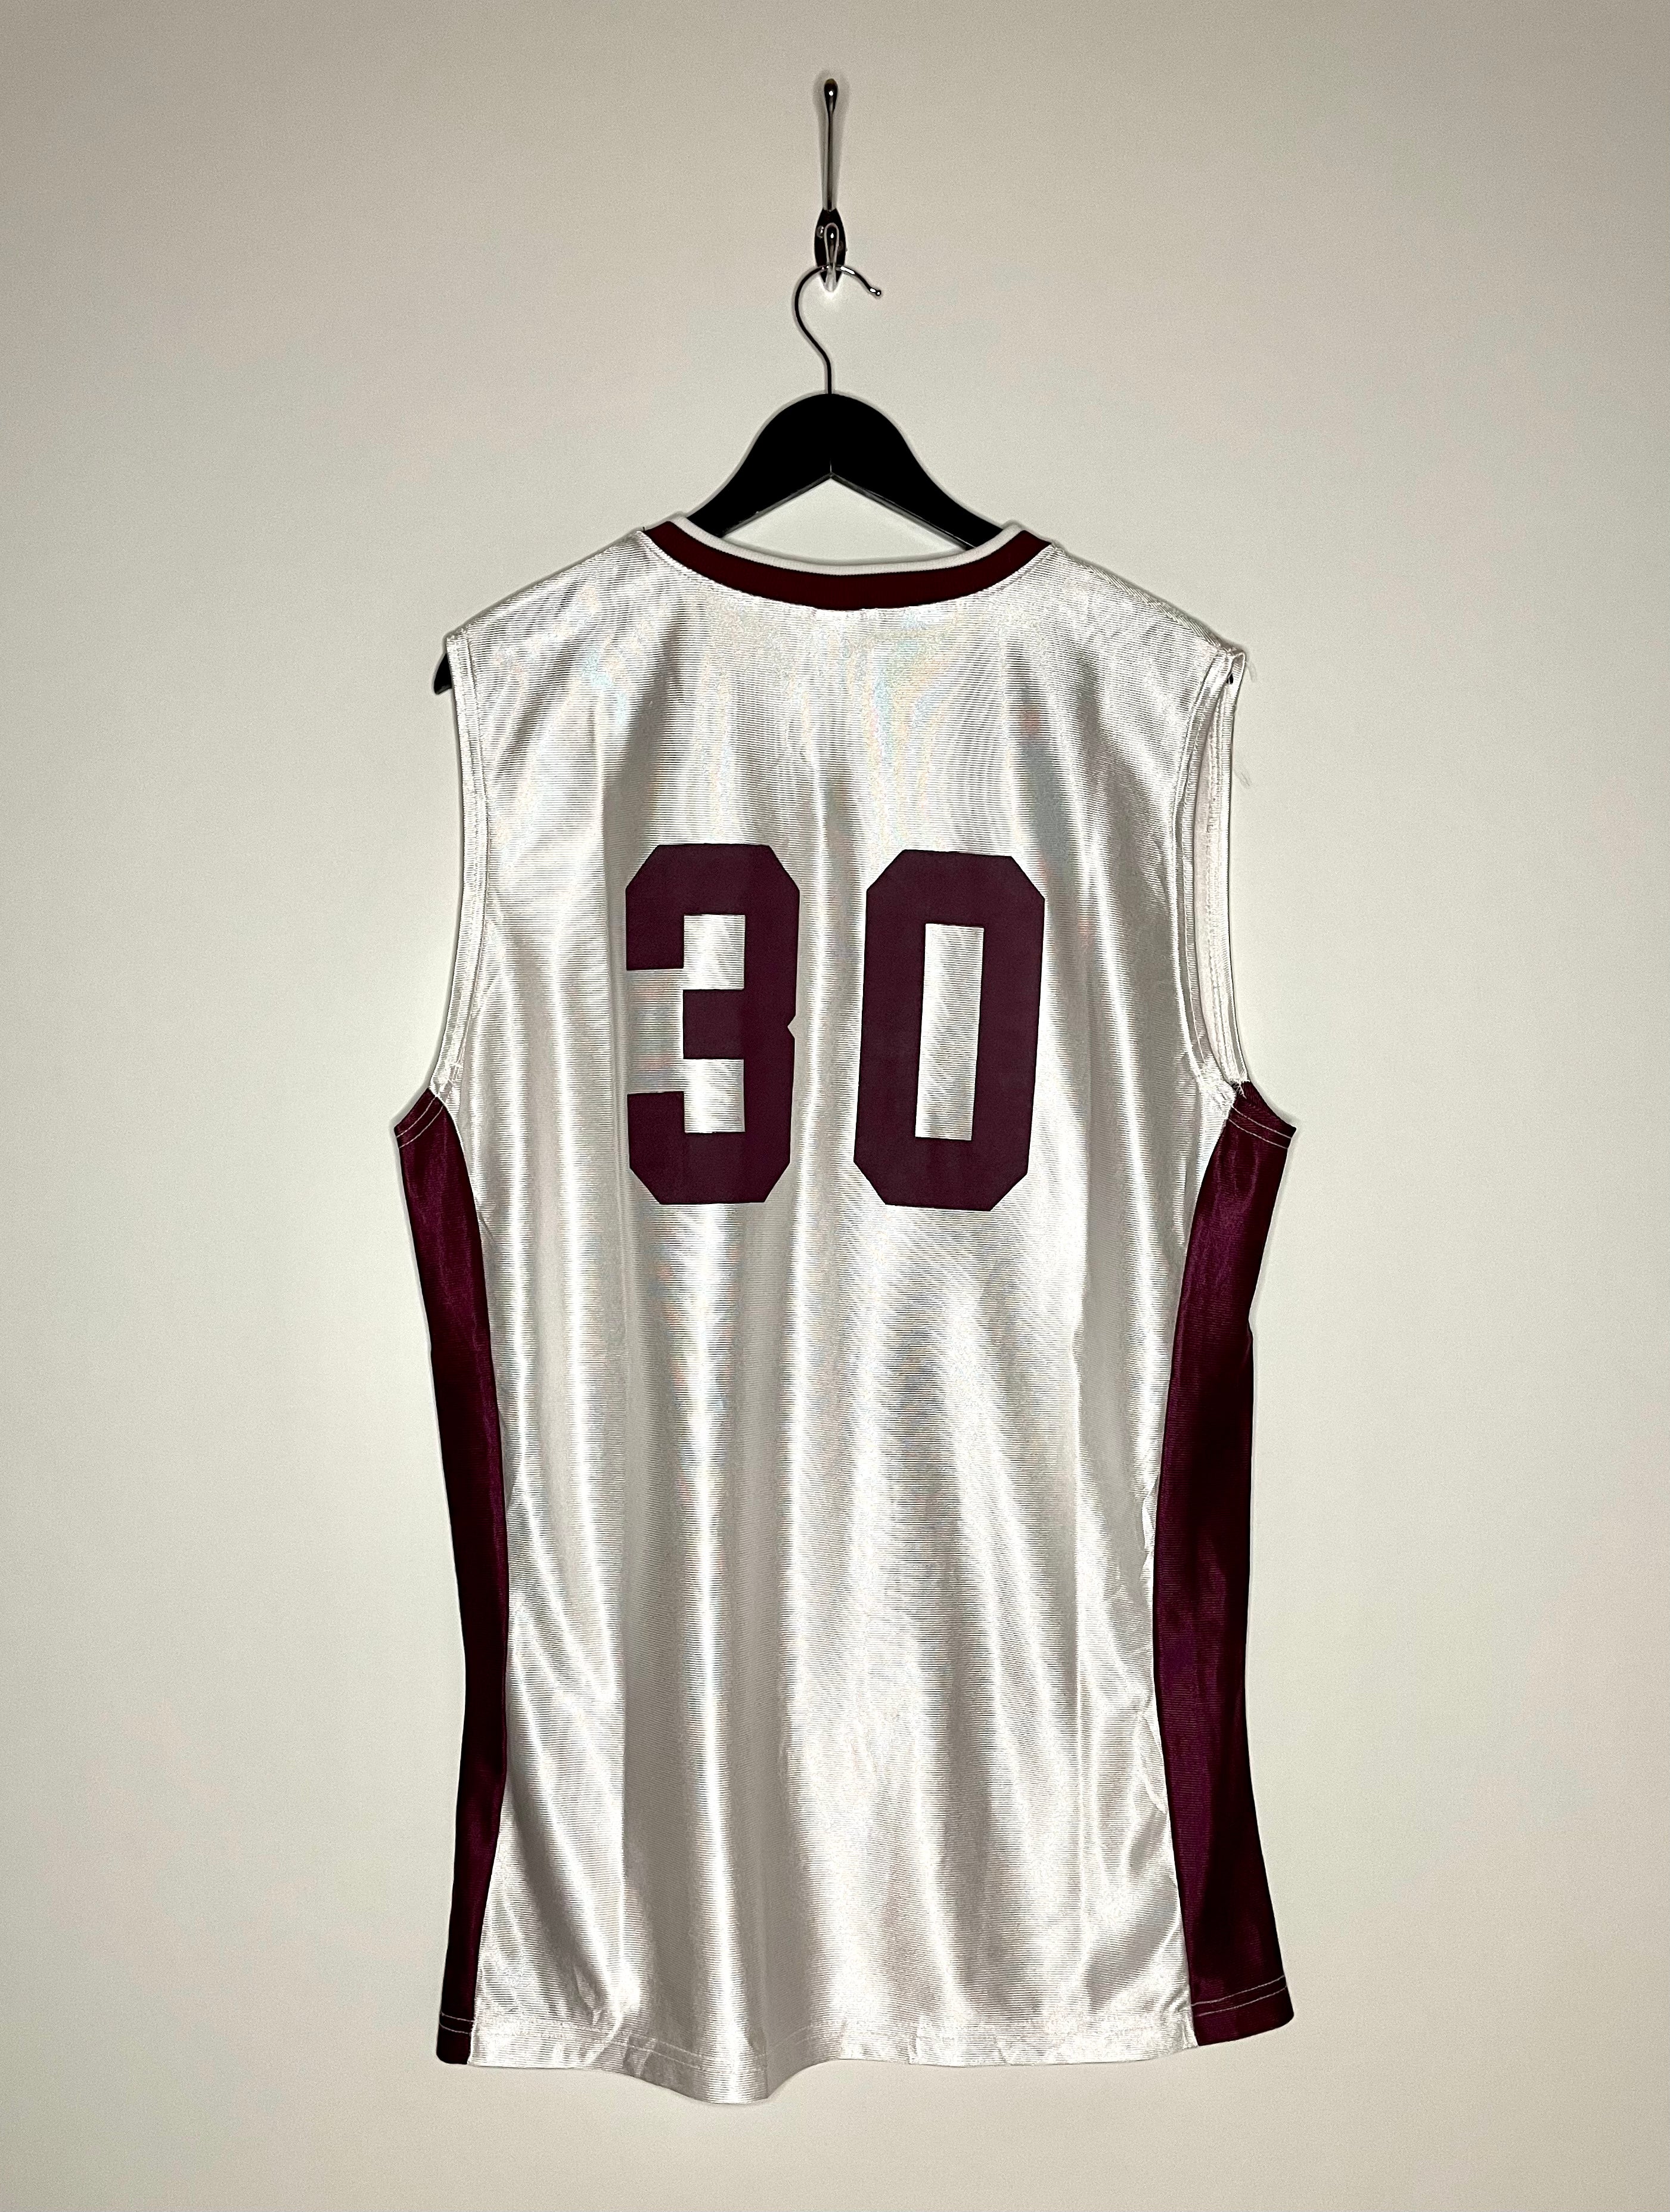 Fussel Athletic Basketball Jersey Antigo #30 Weiß/Rot Größe L